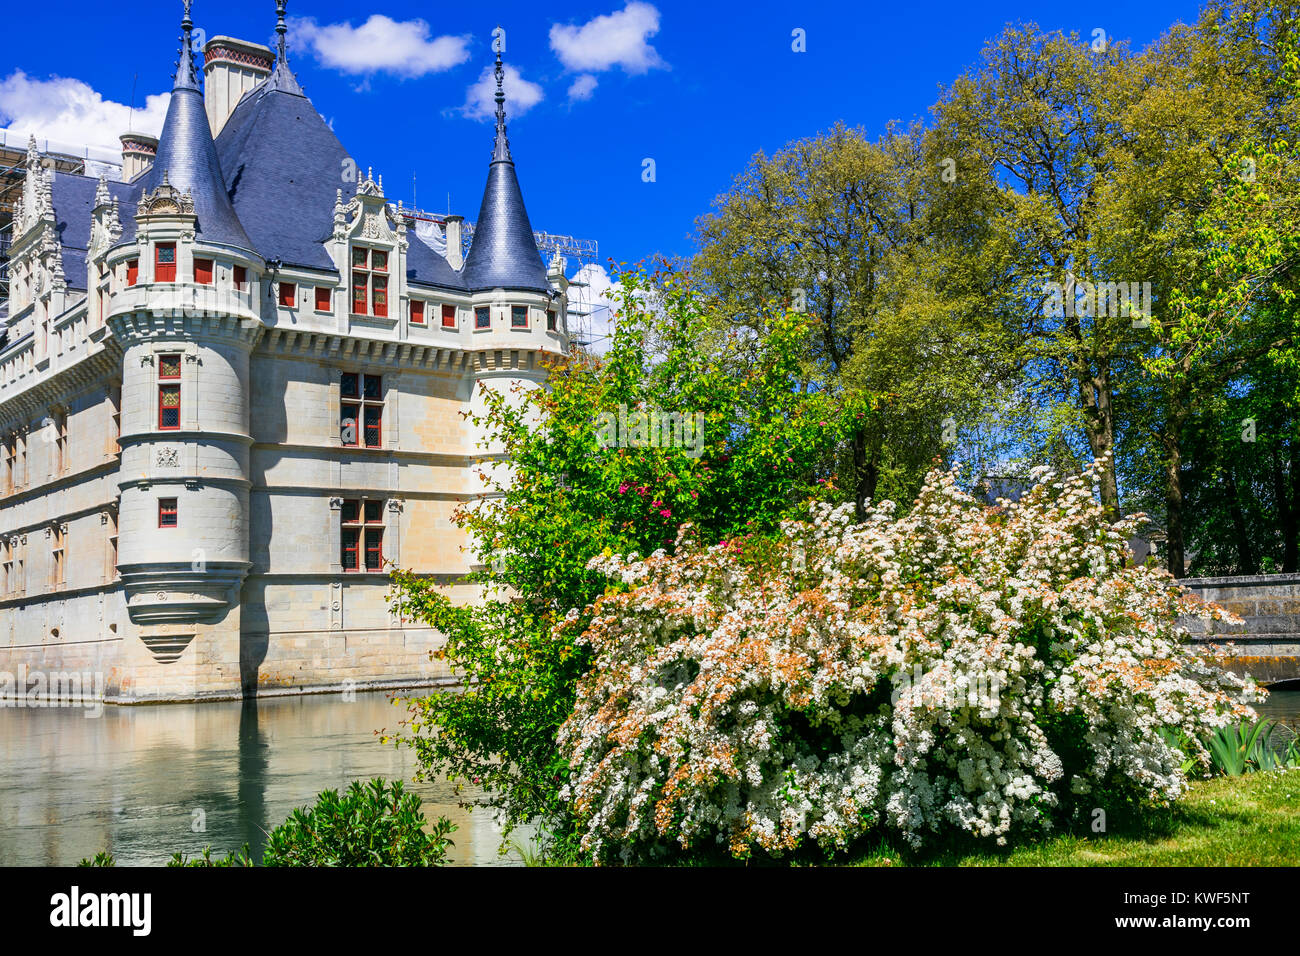 Impressive Chateau Azay-le-Rideau castle,Loire valley,France. Stock Photo